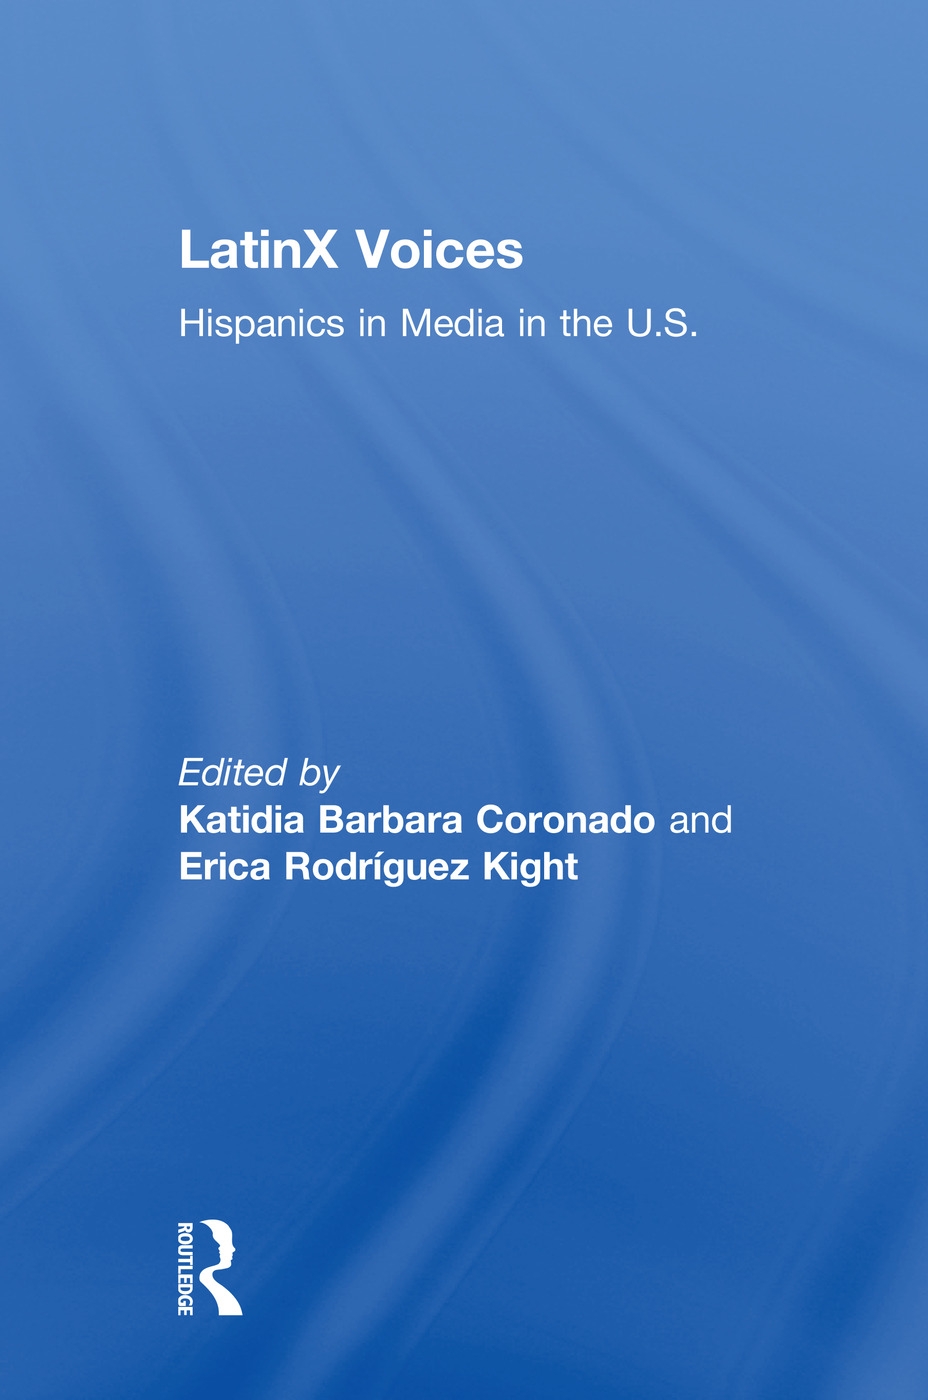 Latinx Voices: Hispanics in Media in the U.S